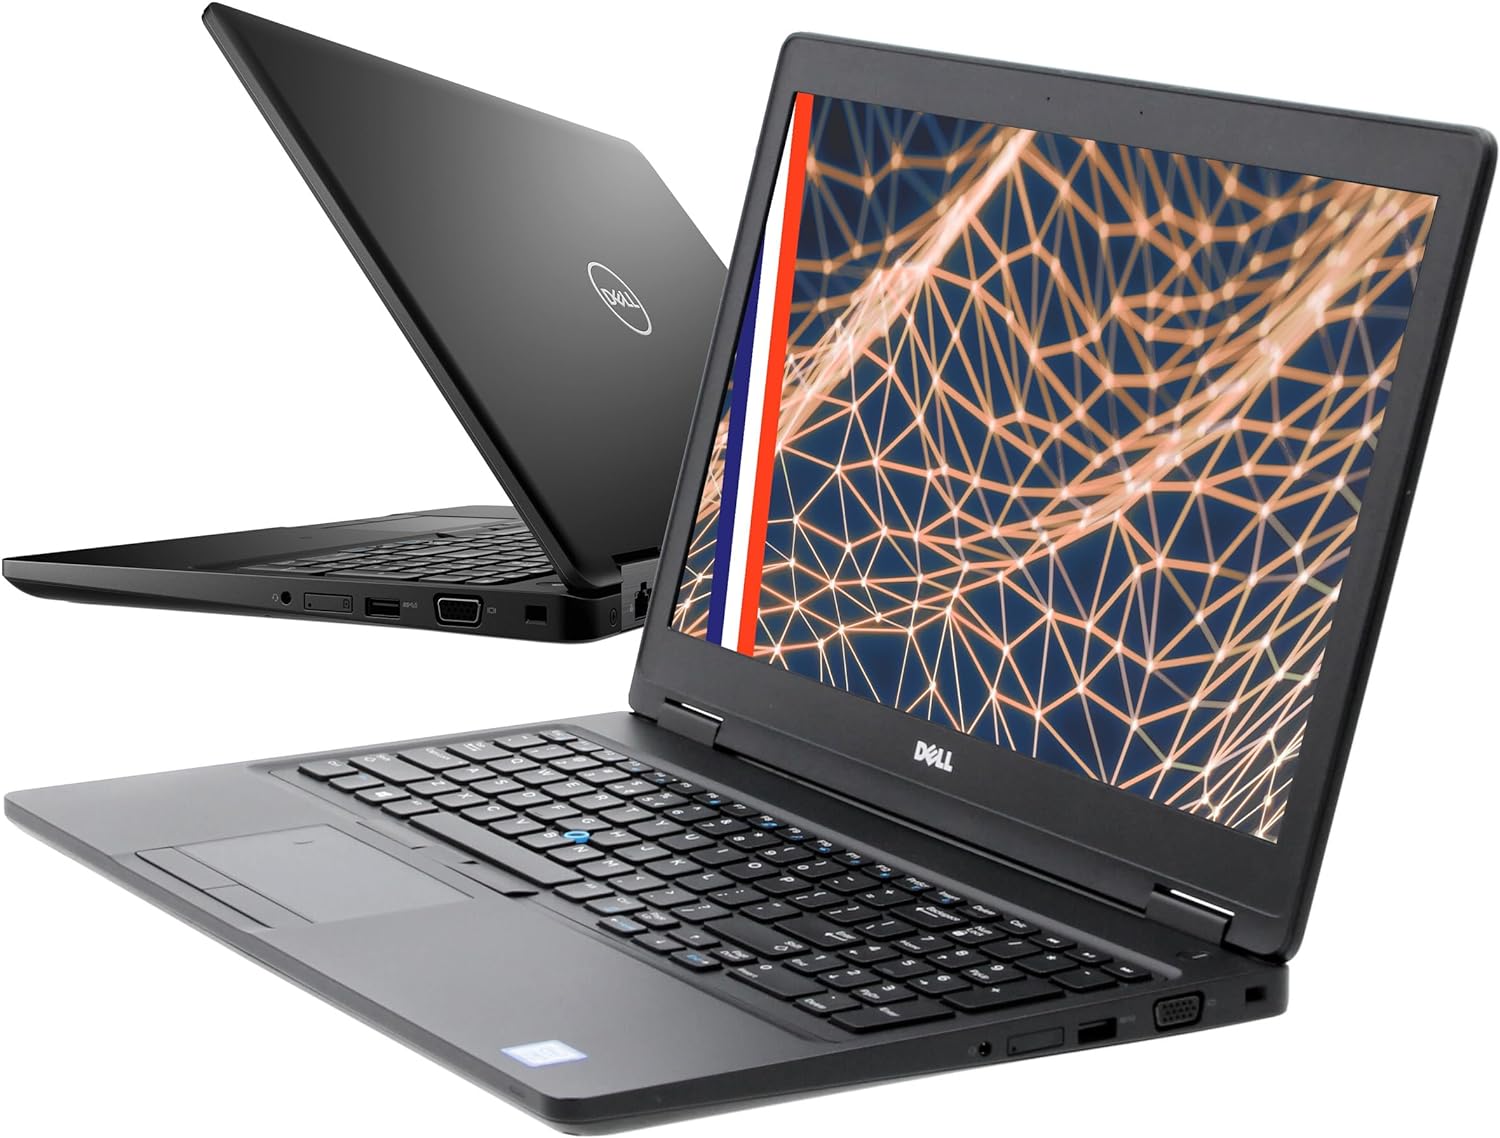 Dell Latitude 5590 Business Laptop, 15.6in HD, Intel Core 7th Gen i5-7300U Up to 3.50GHz, 8GB DDR4, 256GB SSD, Win 10 Pro (Renewed)